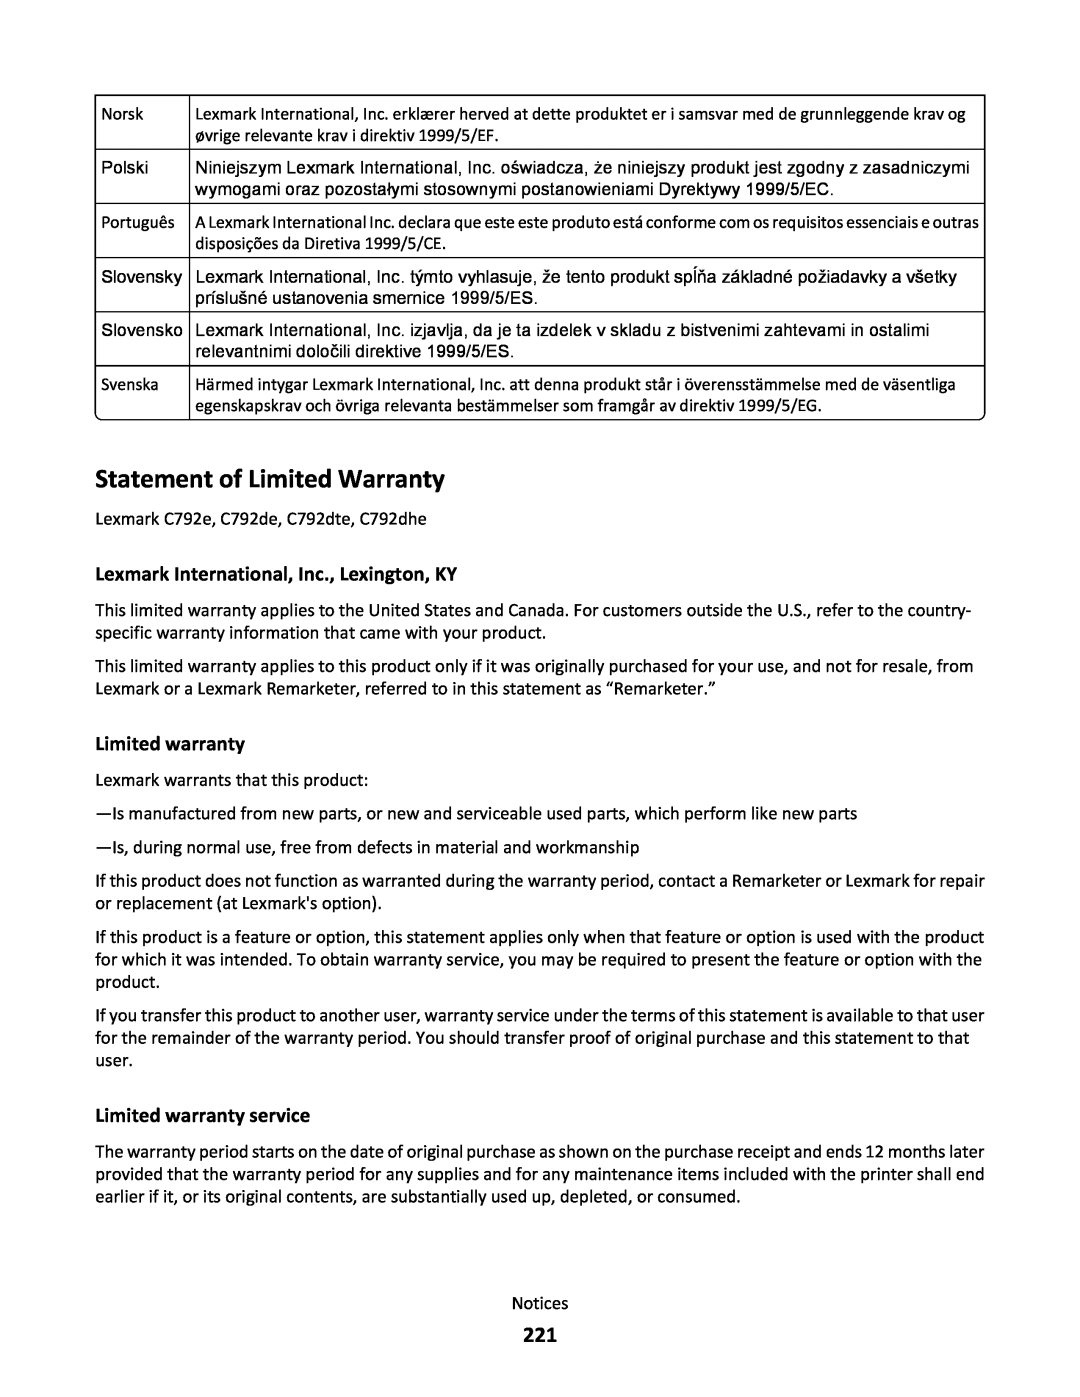 Lexmark C790 manual Statement of Limited Warranty, Lexmark International, Inc., Lexington, KY, Limited warranty 